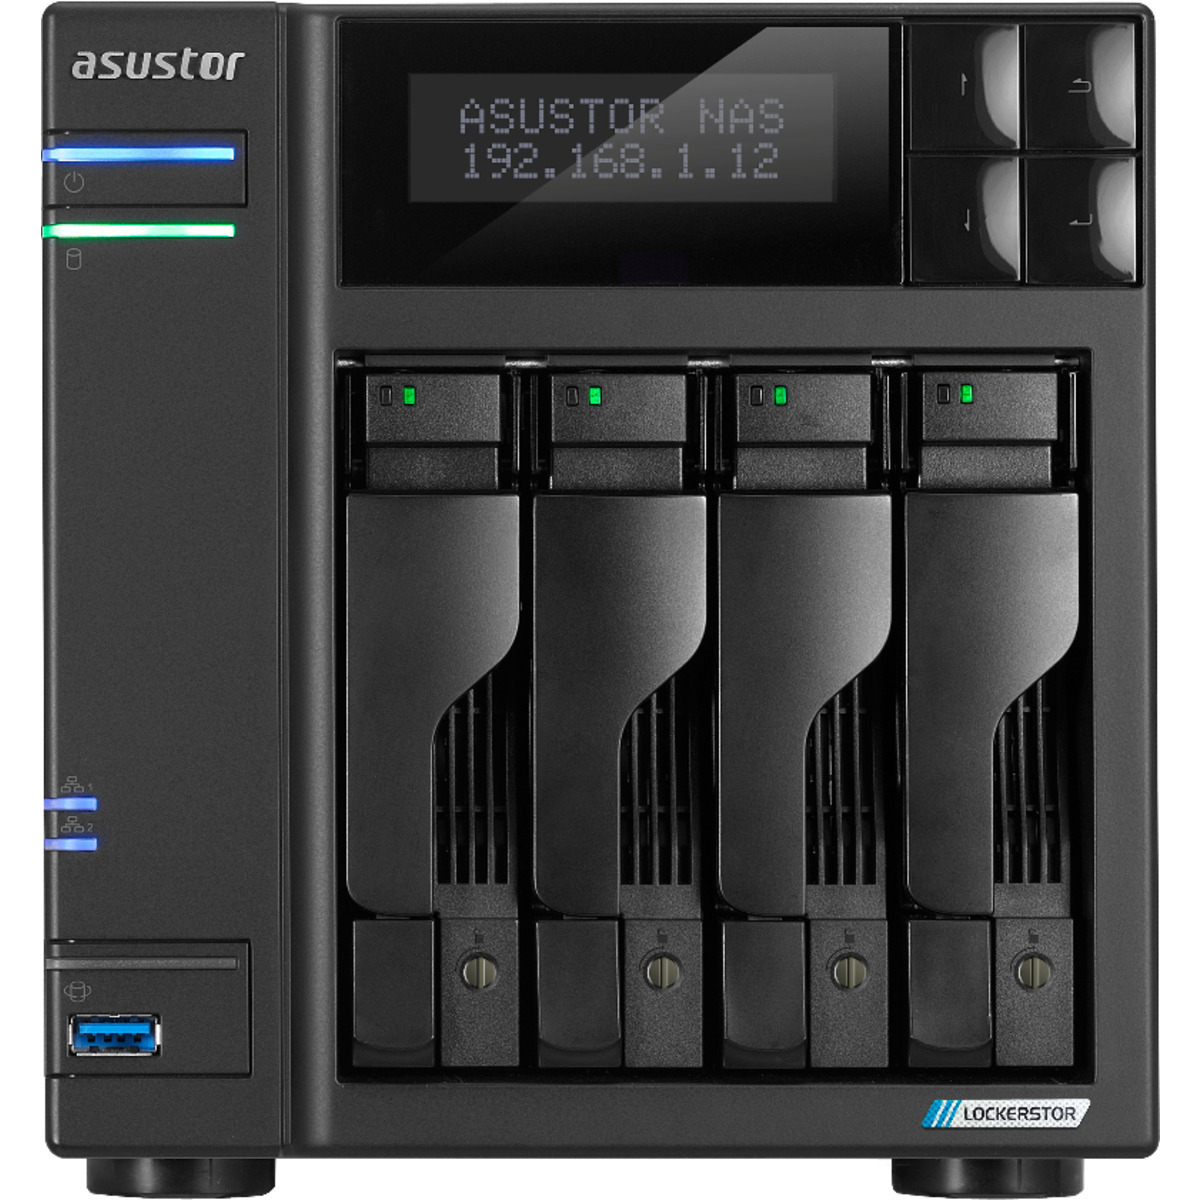 ASUSTOR LOCKERSTOR 4 Gen2 AS6704T Desktop 4-Bay Multimedia / Power User / Business NAS - Network Attached Storage Device Burn-In Tested Configurations - FREE RAM UPGRADE LOCKERSTOR 4 Gen2 AS6704T